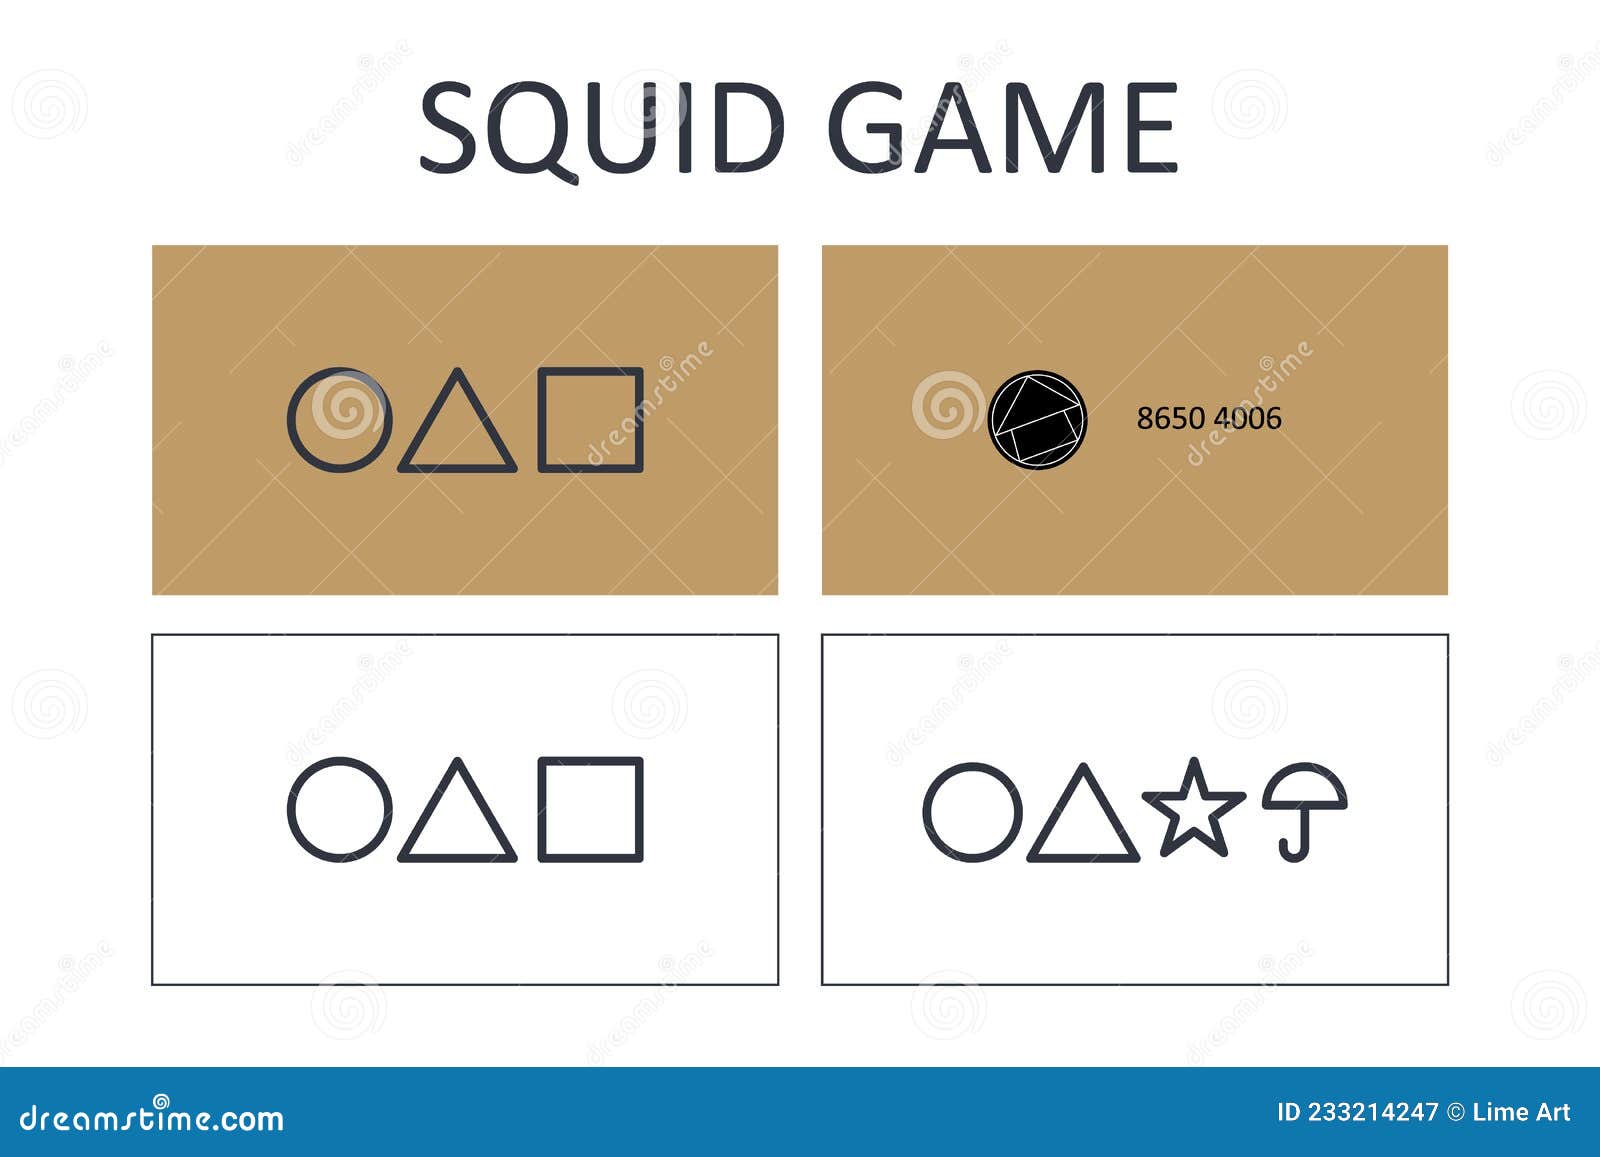 Squid Game Card Vector inspire ideas 2022